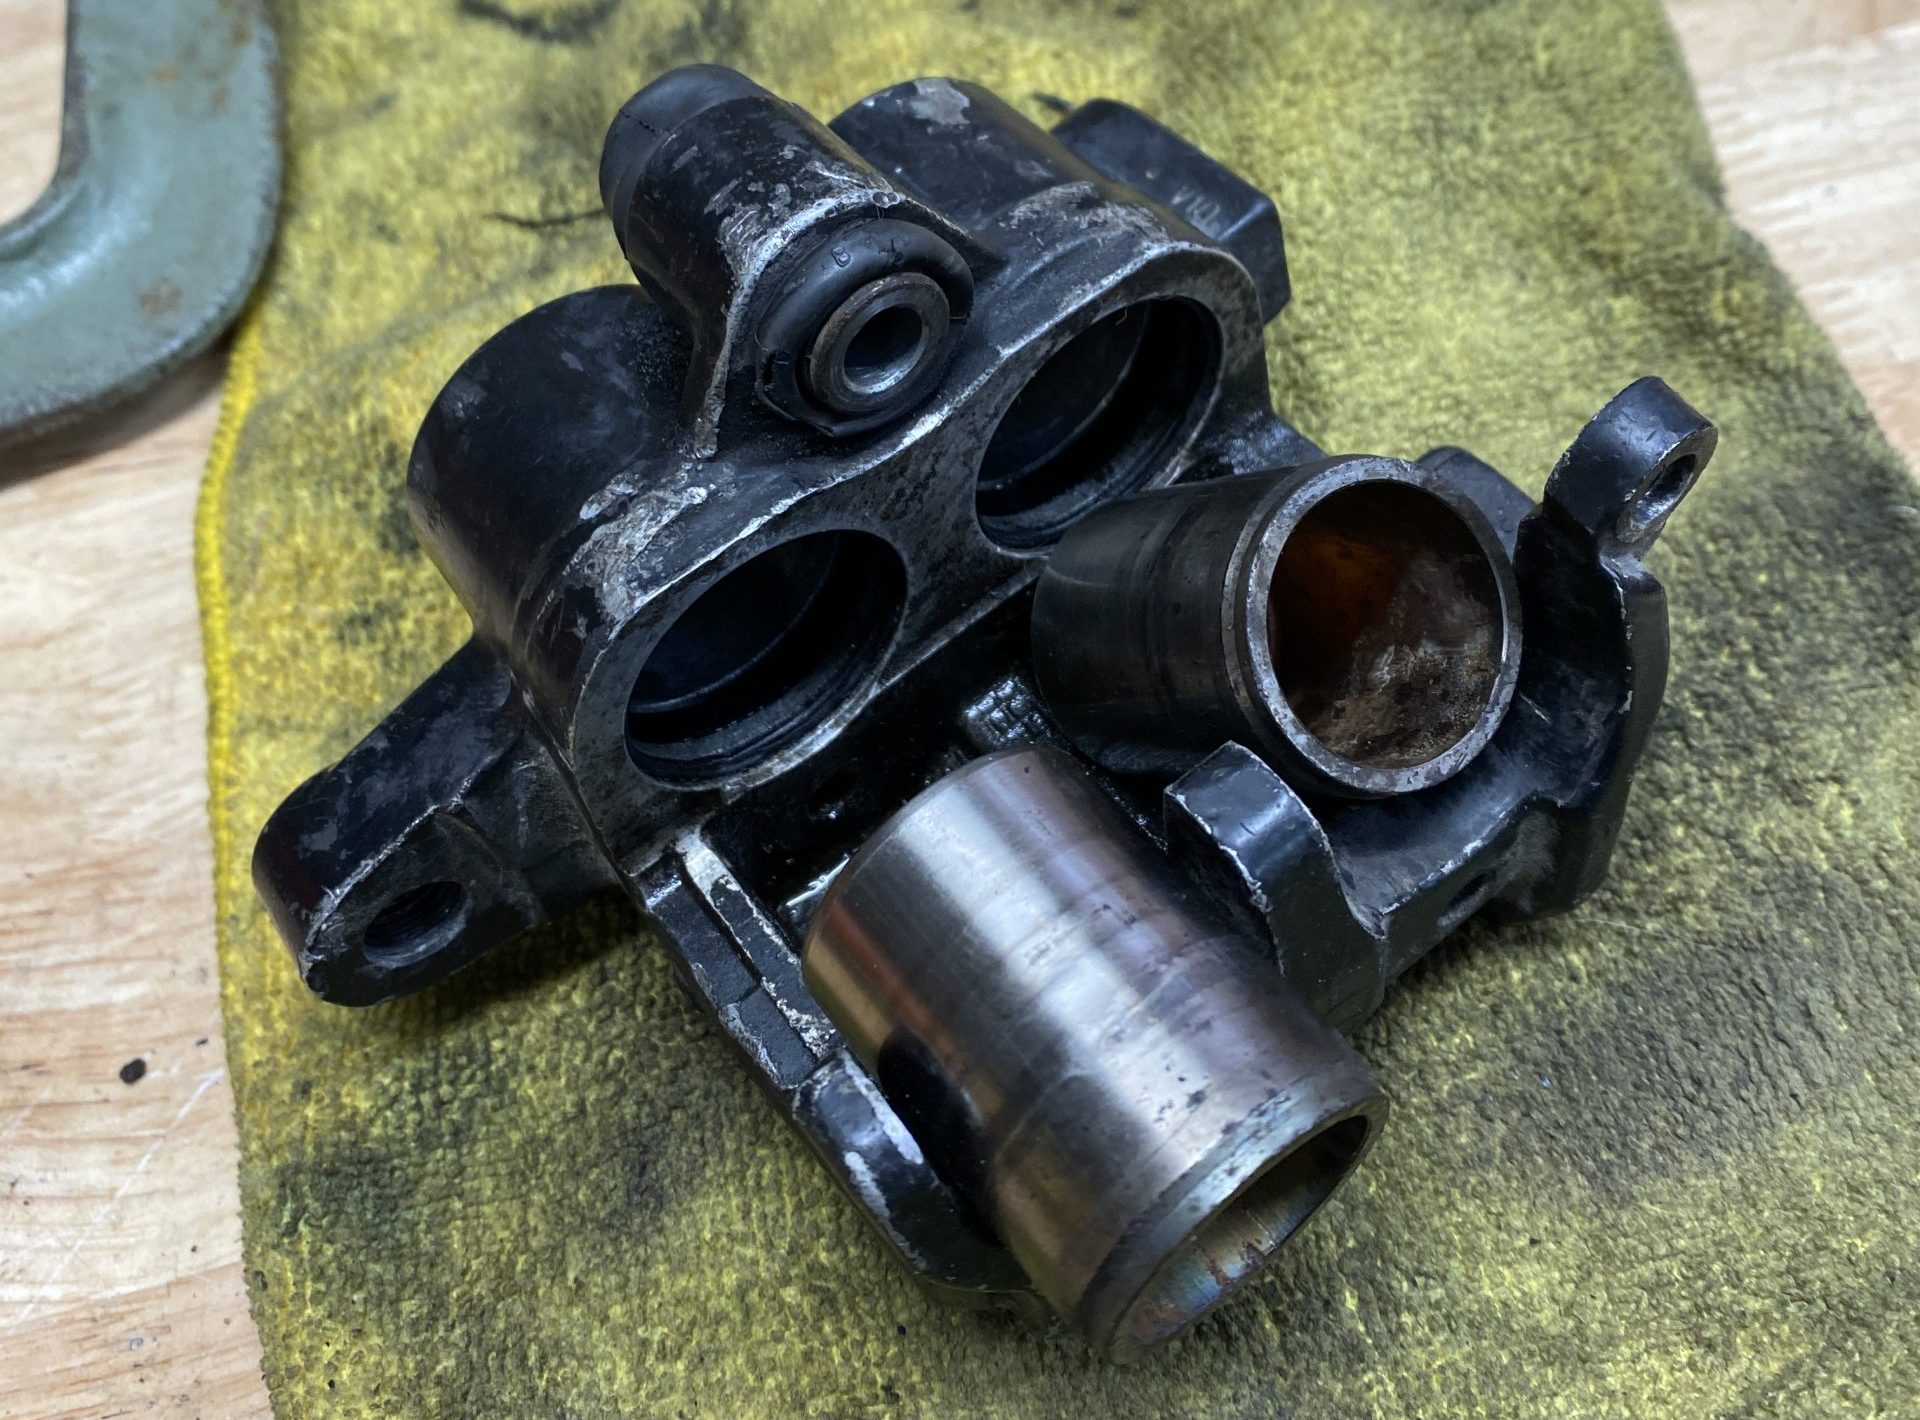 3 tips for rebuilding brake calipers